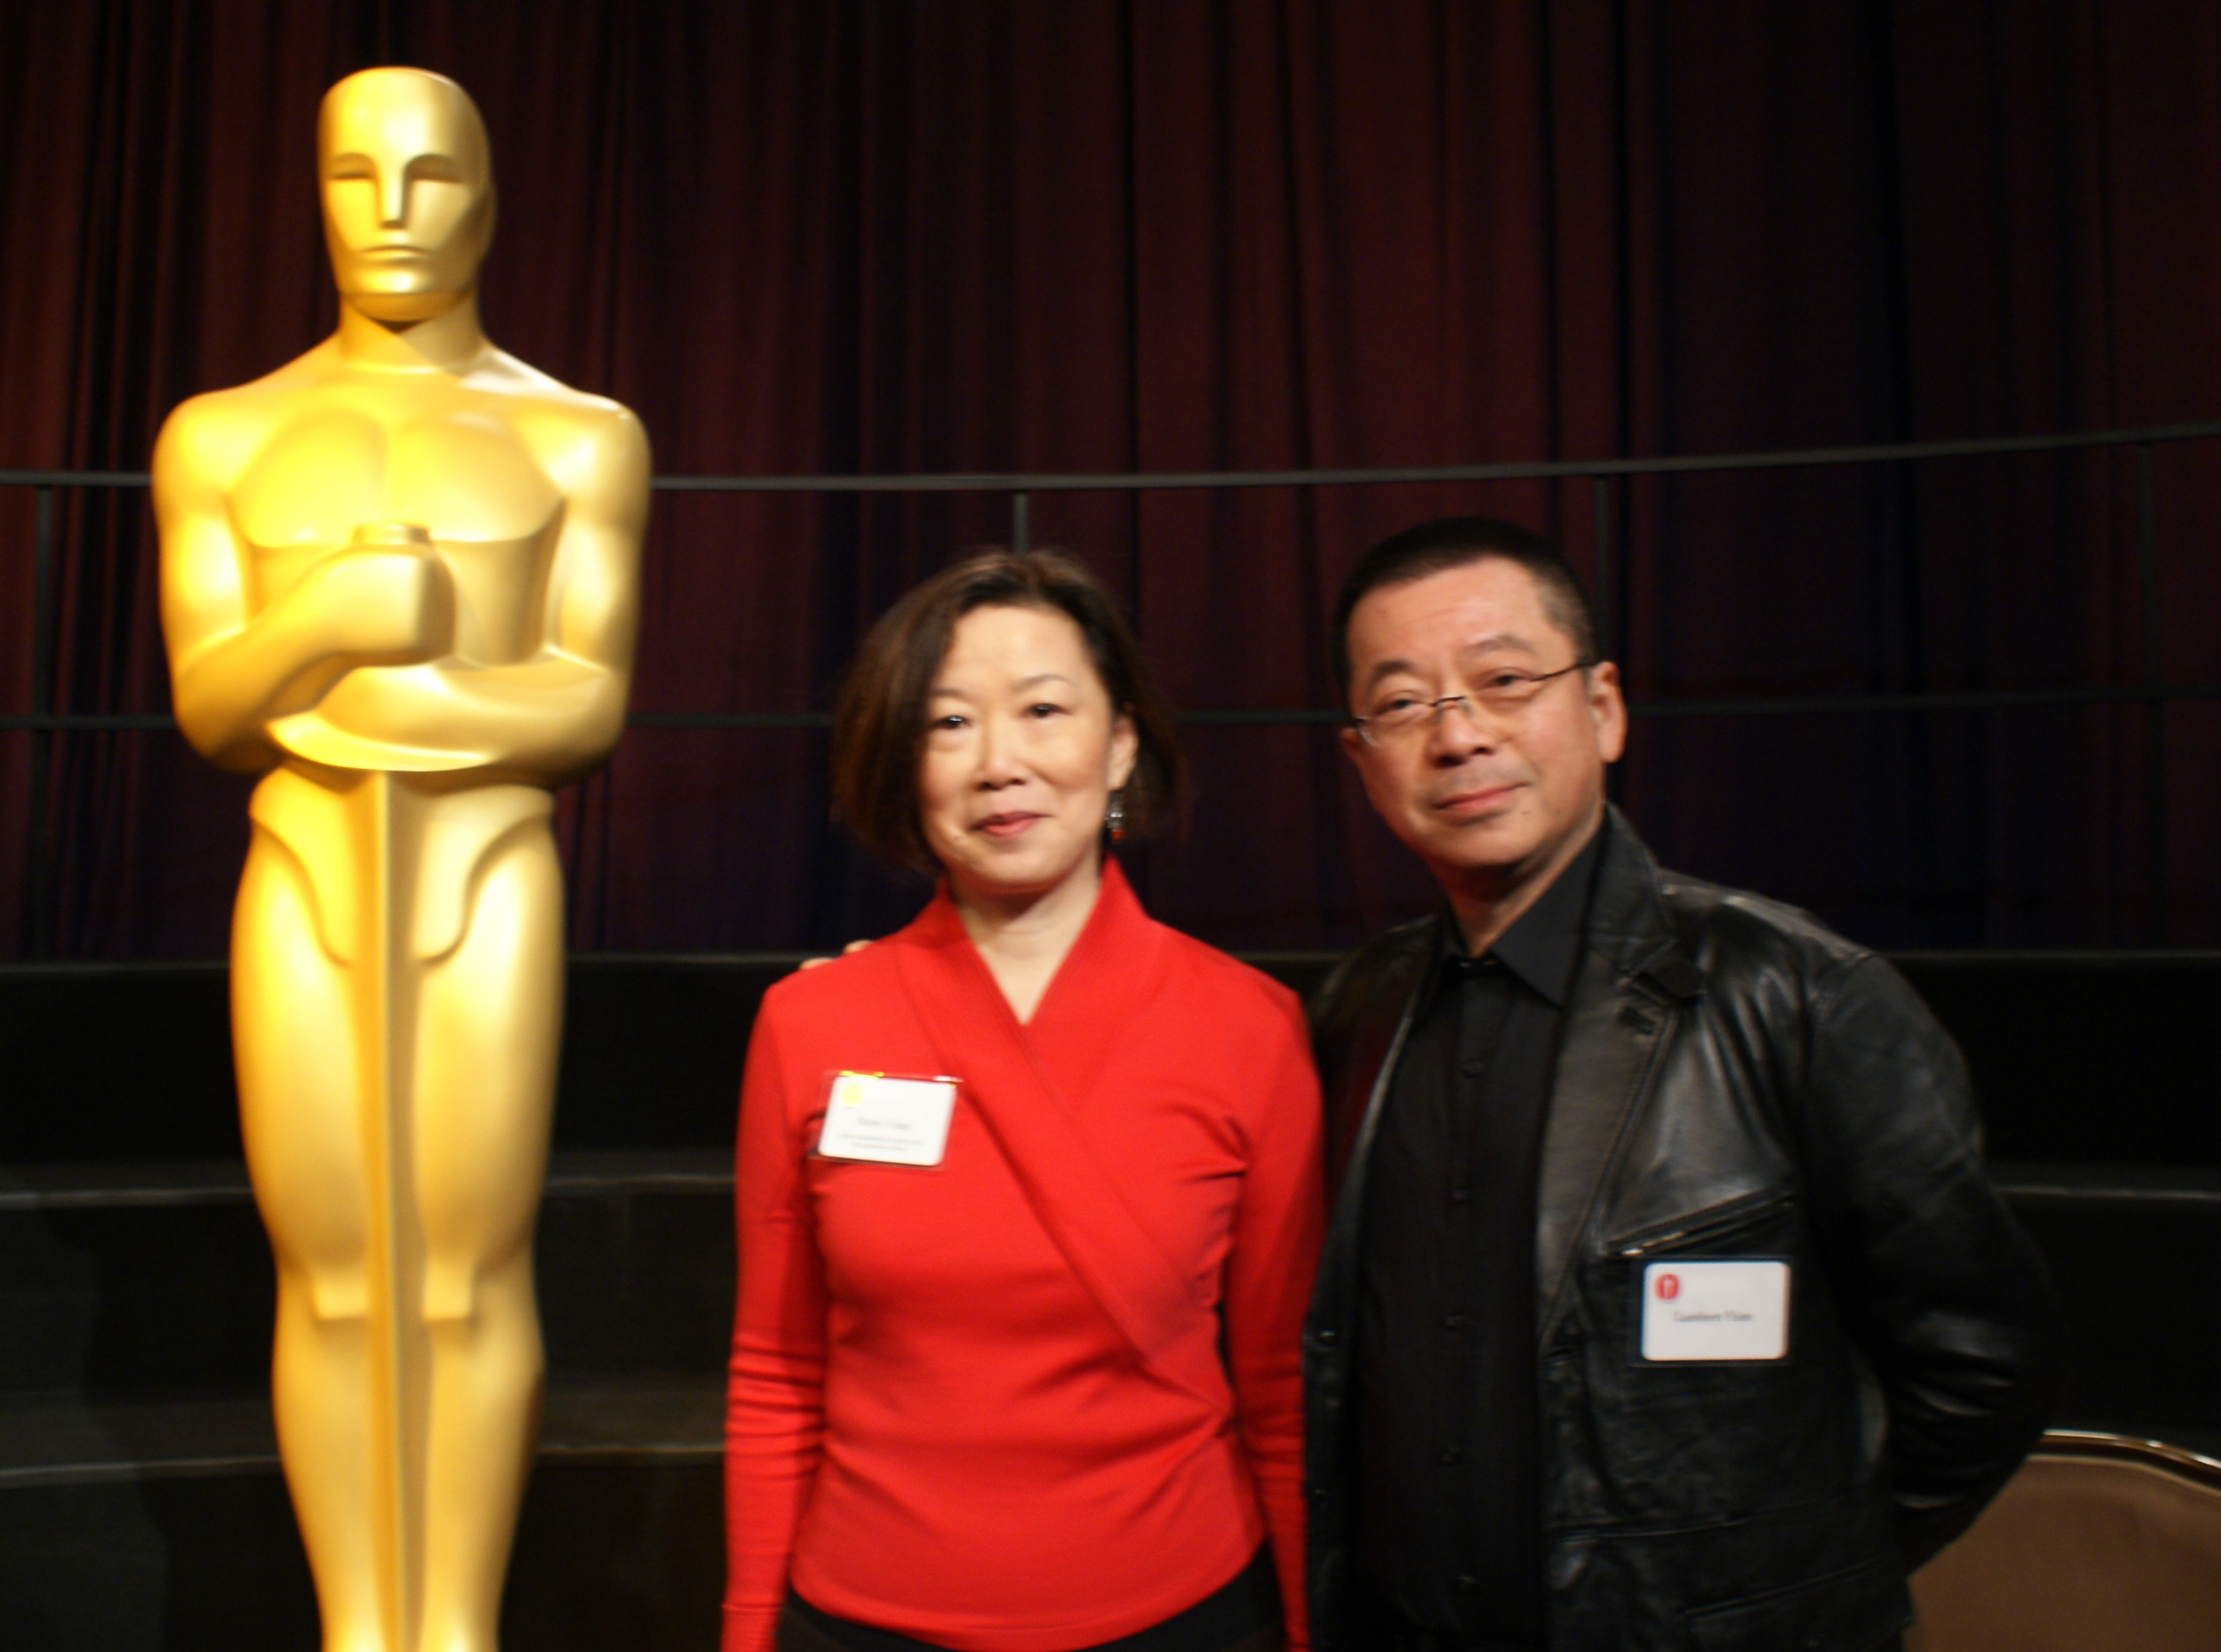 83rd Academy Awards Luncheon, Ruby Yang with her husband Lambert Yam.